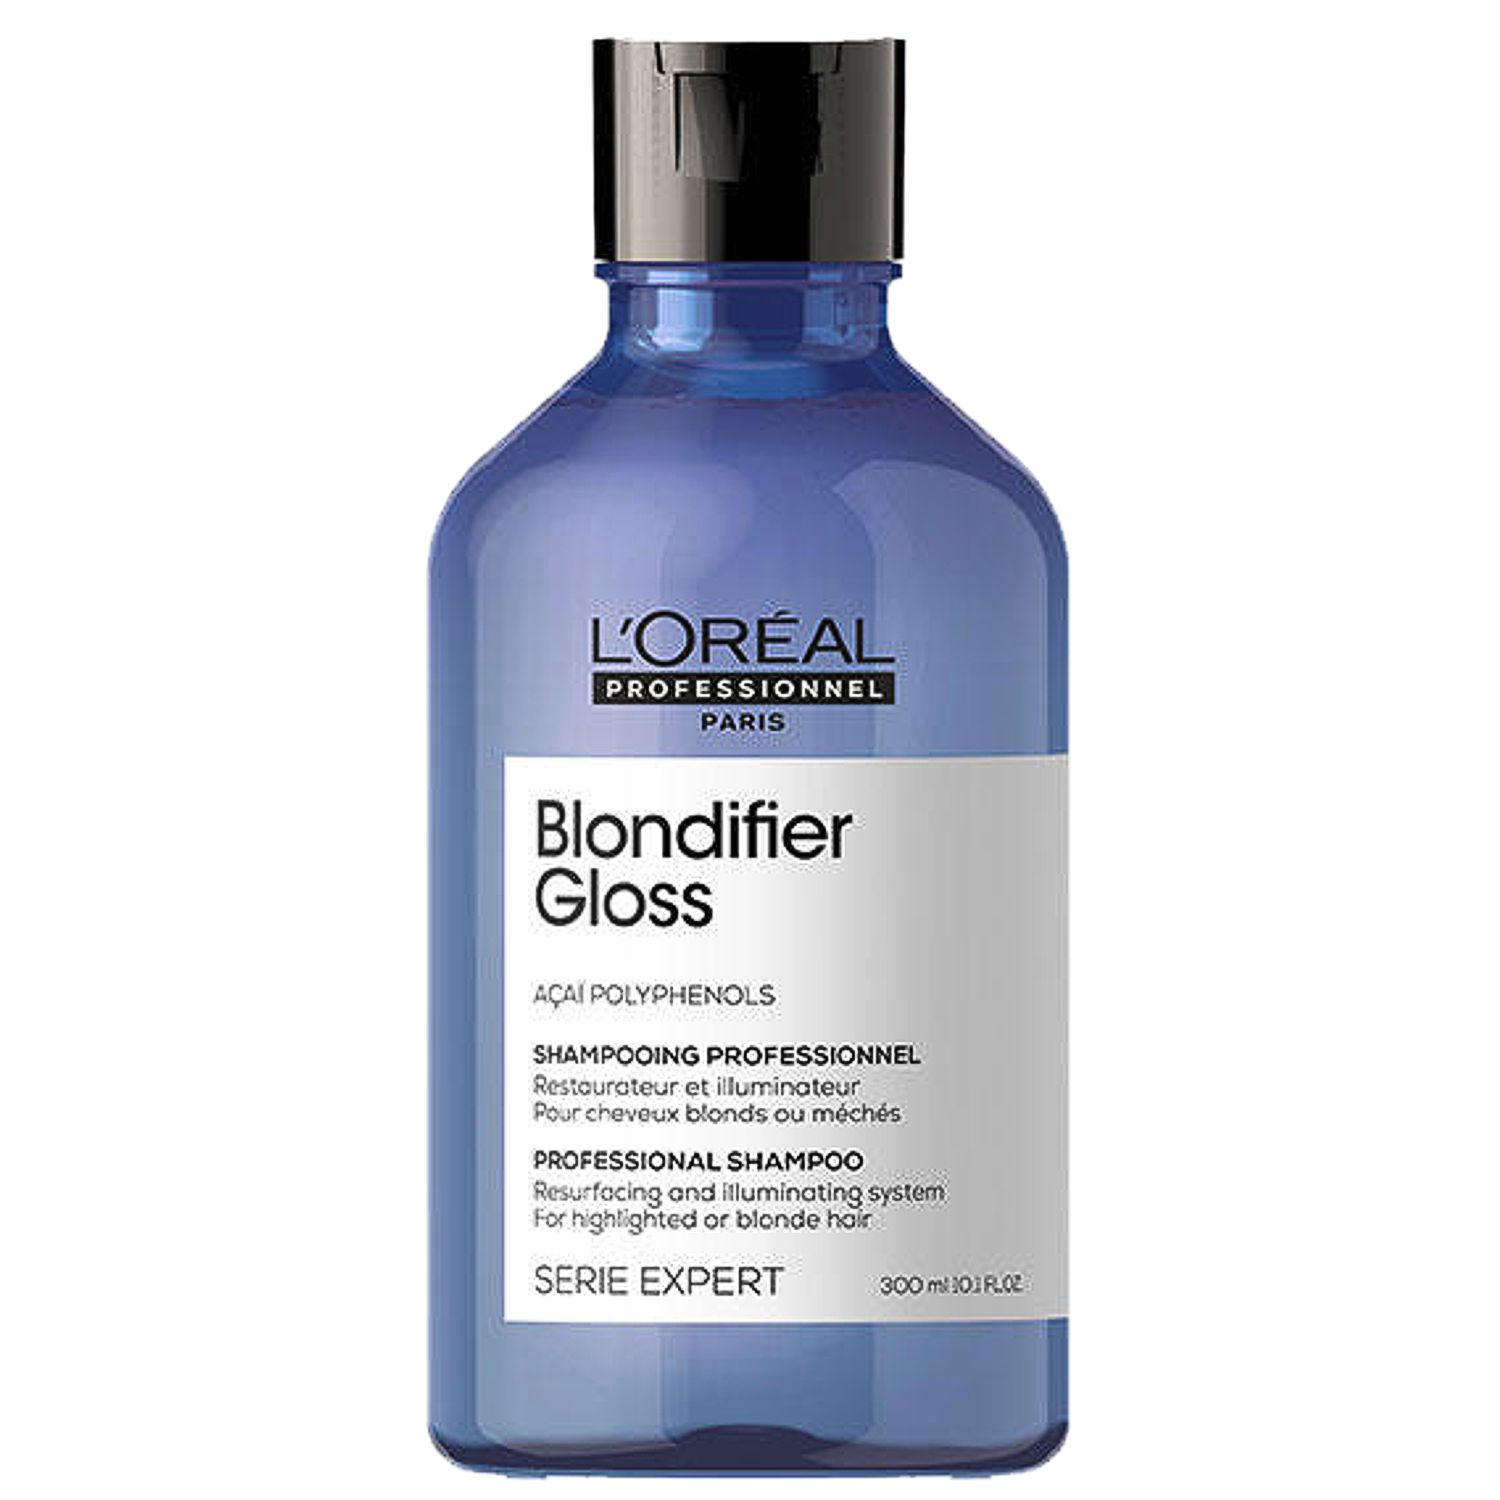 L'Oréal Expert BLONDIFIER GLOSS Professional Shampoo 300 ml